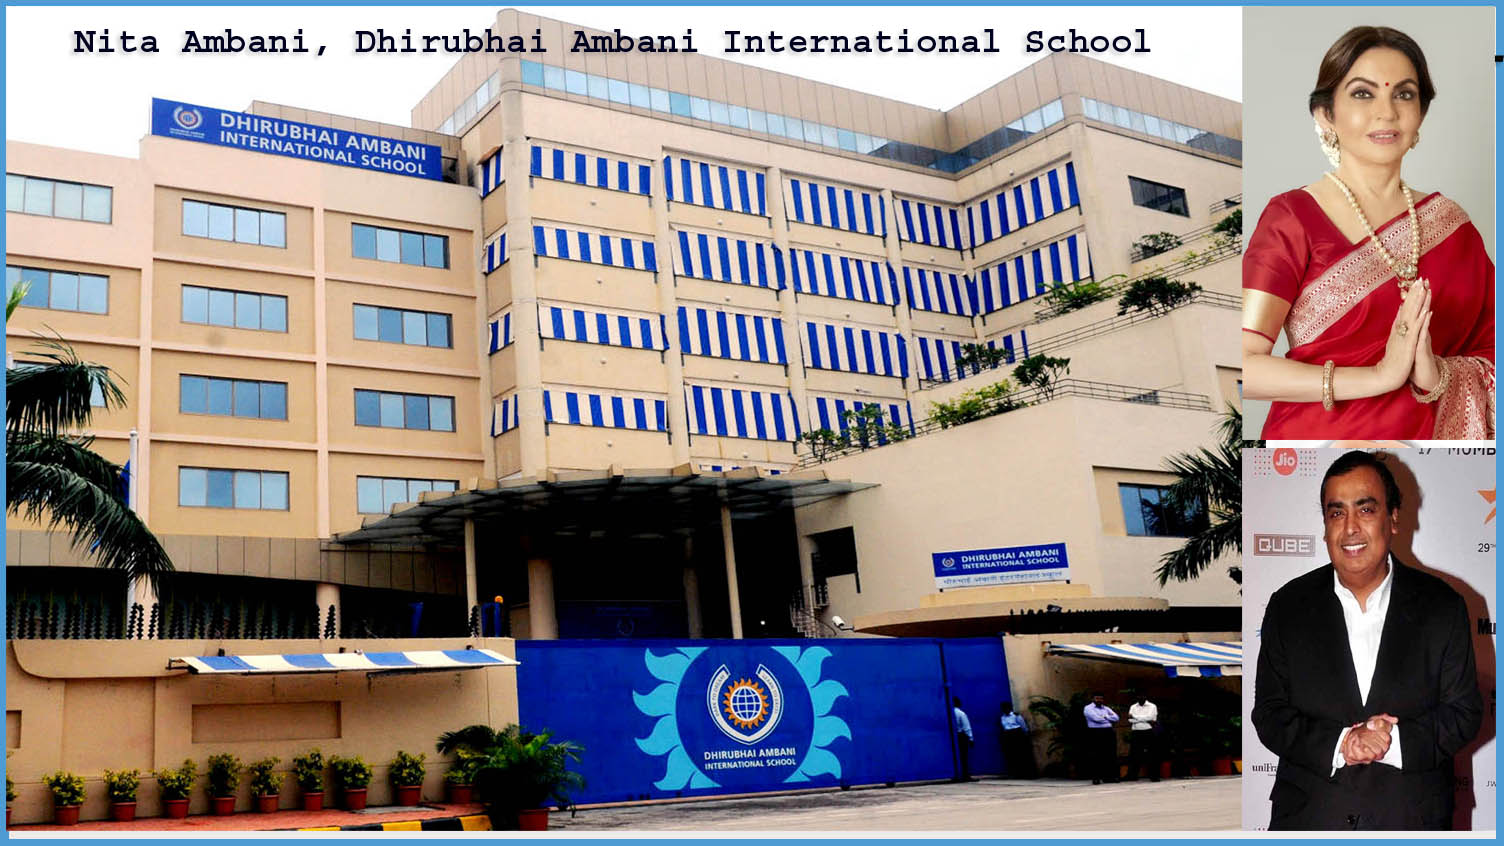 Nita Ambani, Dhirubhai Ambani International School